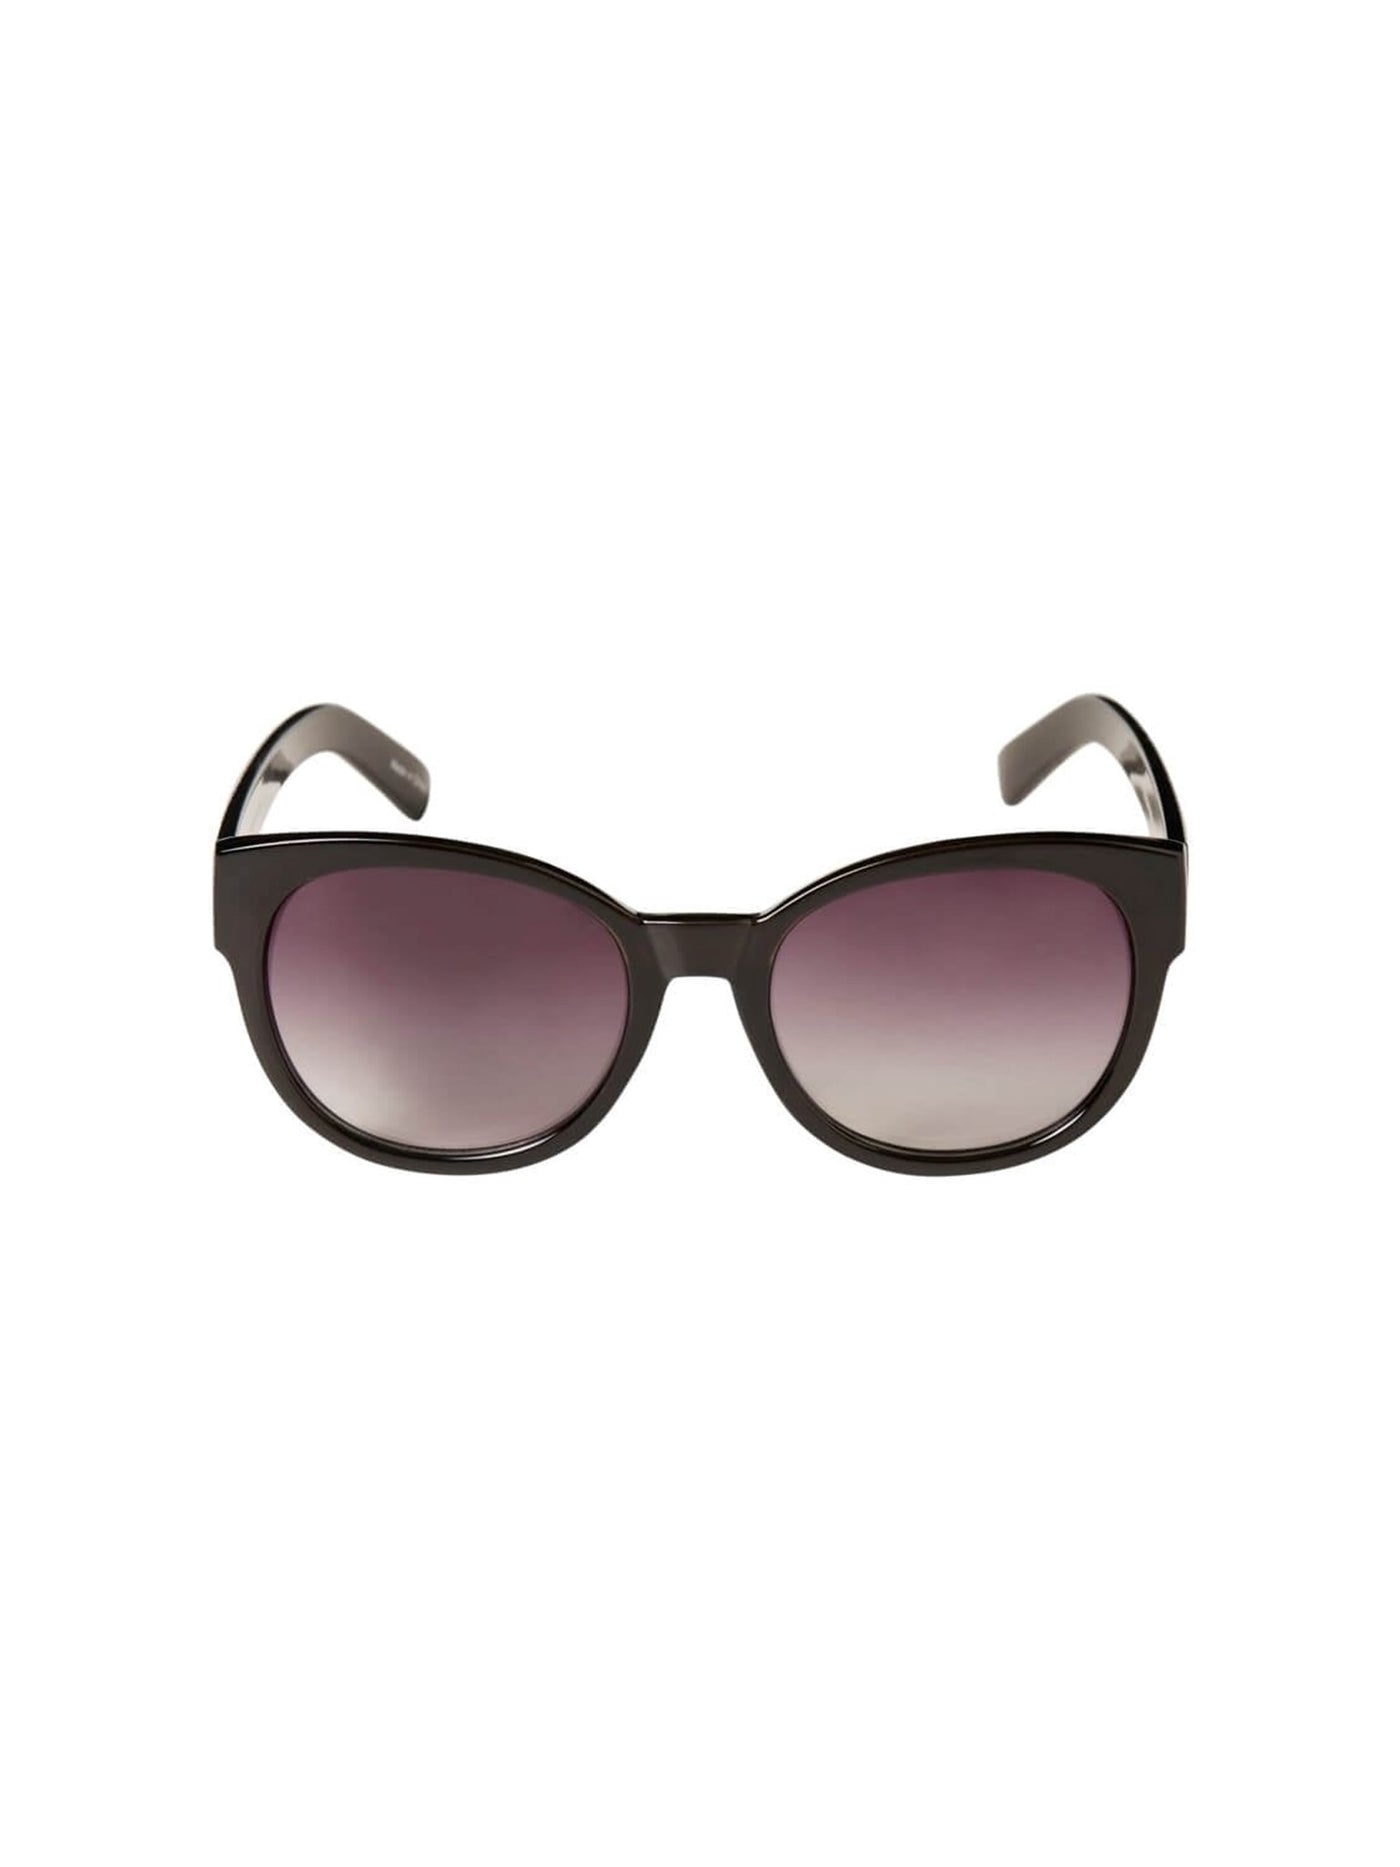 Solbriller - Svart style - Vero Moda 3